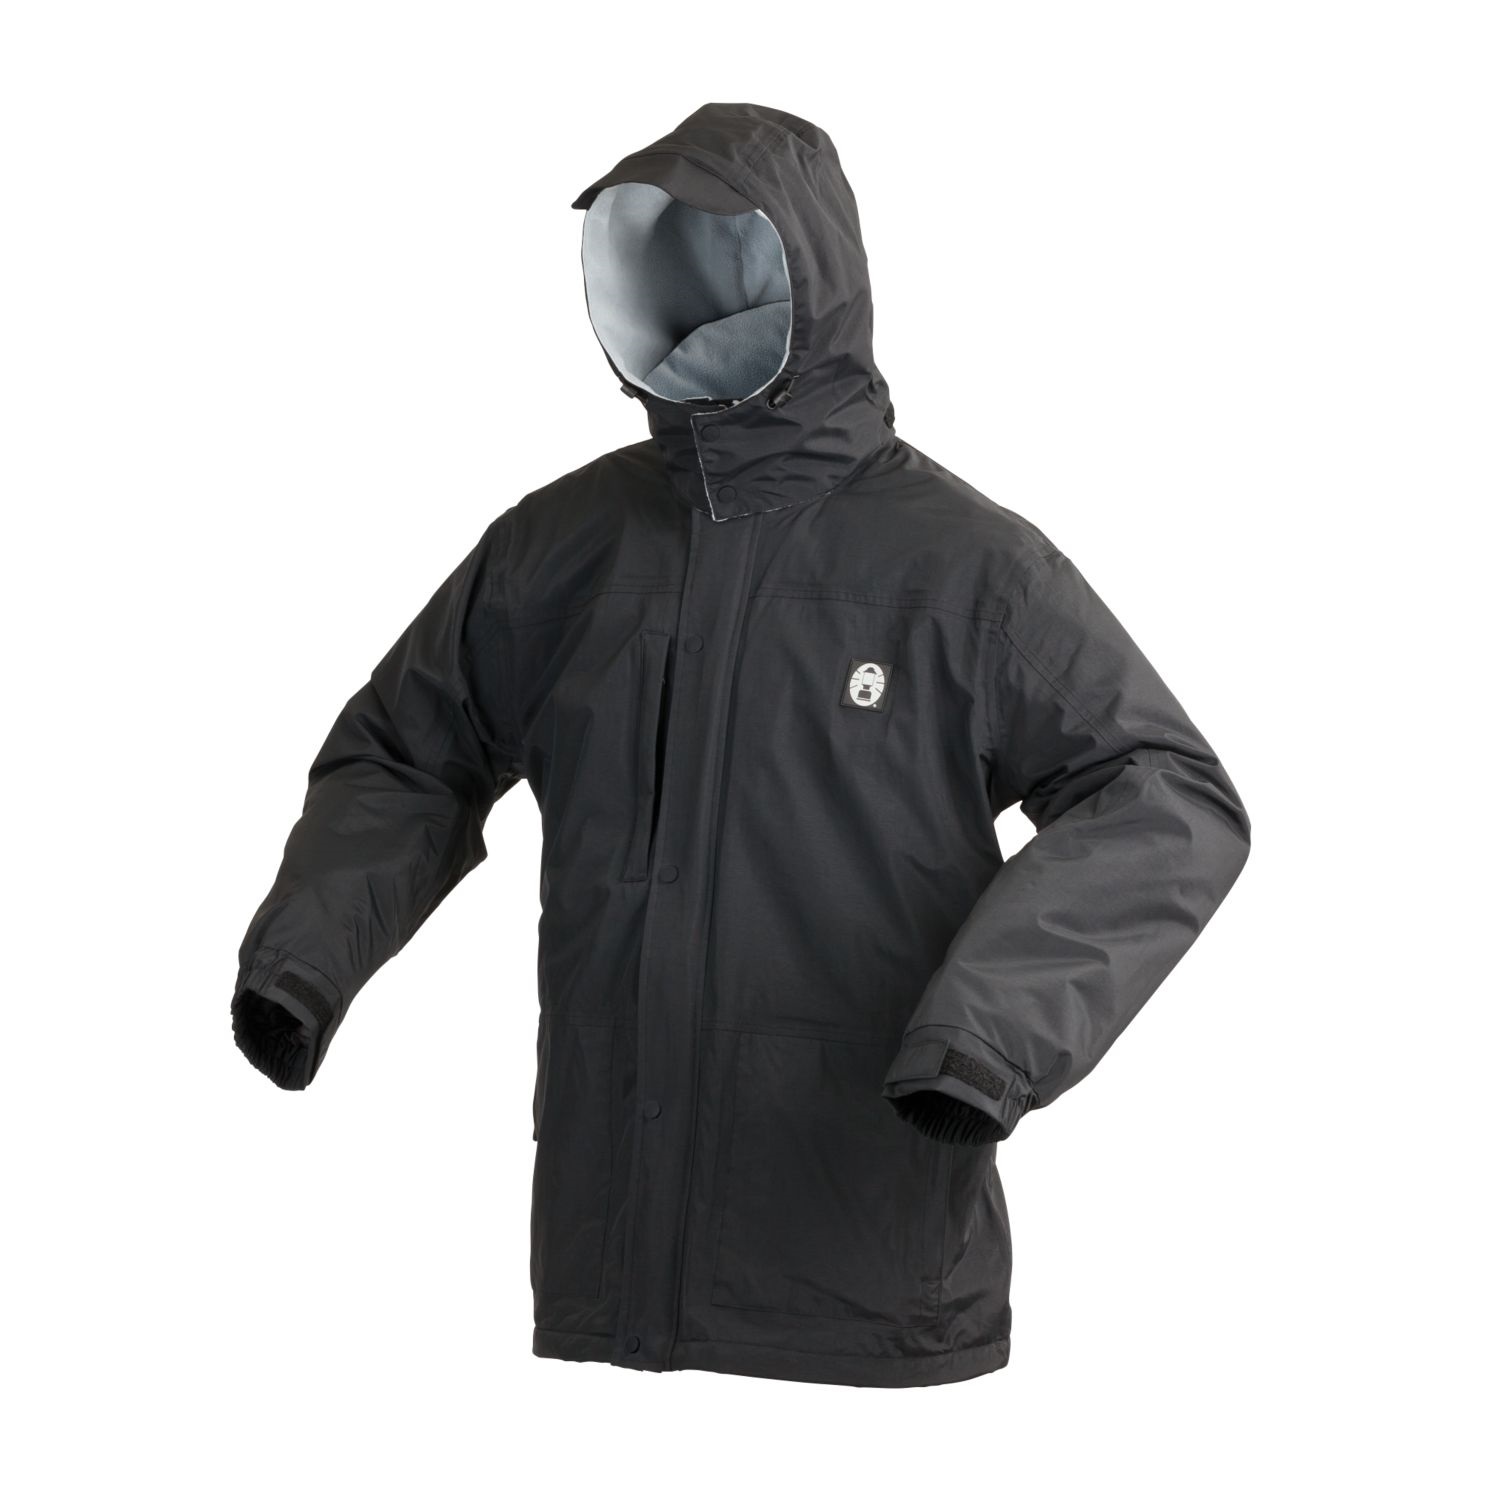 Coleman Apparel Fleece Lined Black Jacket Small - 2000014382